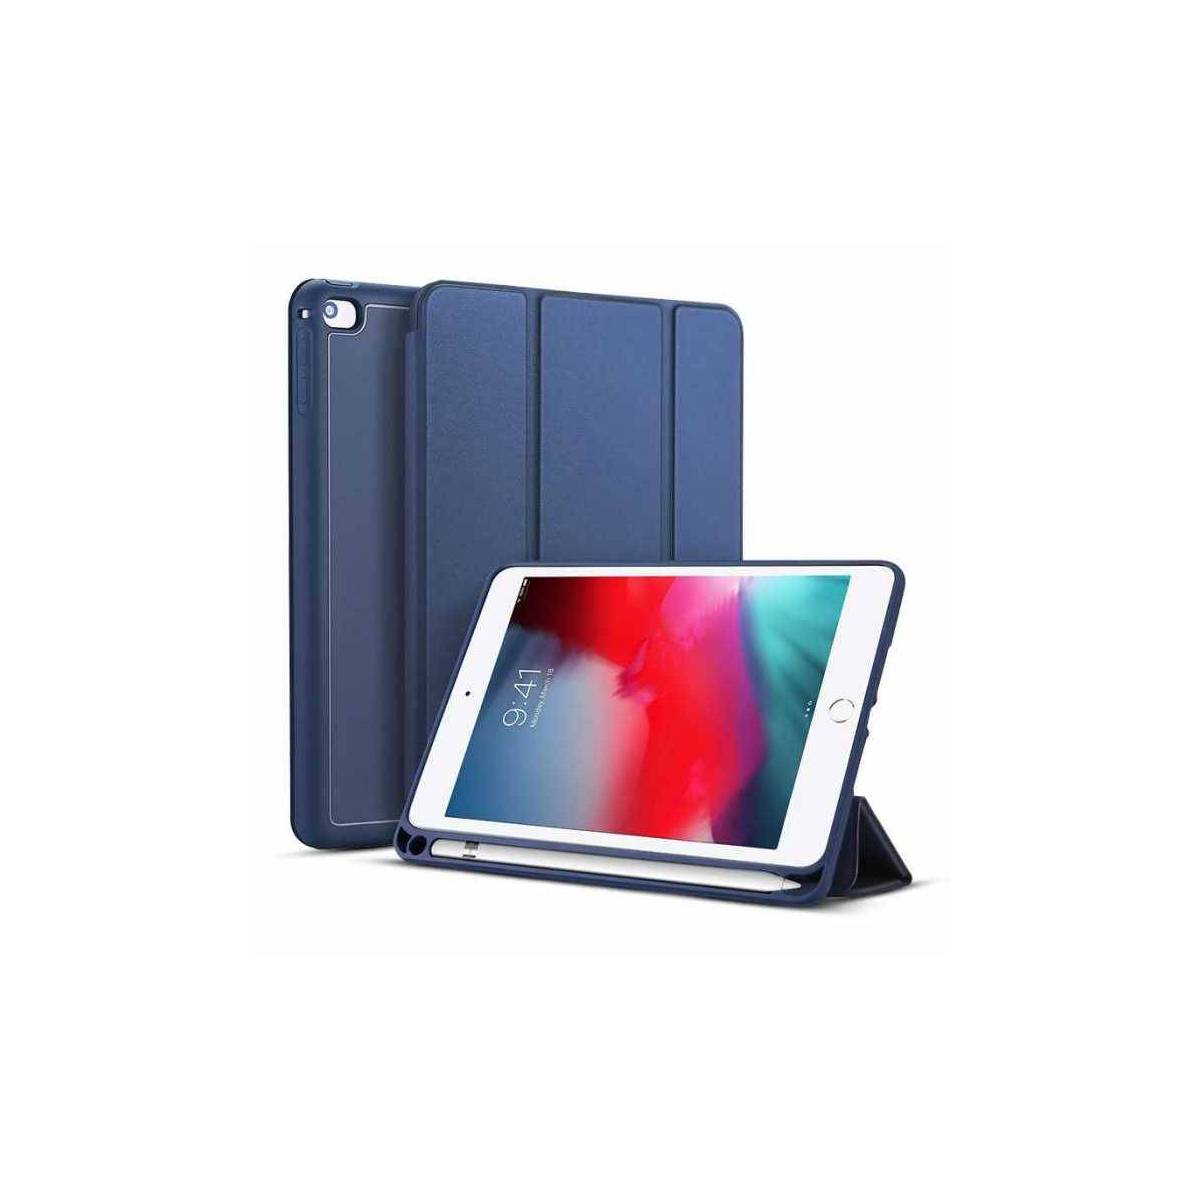 Folio Bleu marine iPad Air 3/Pro 10.5